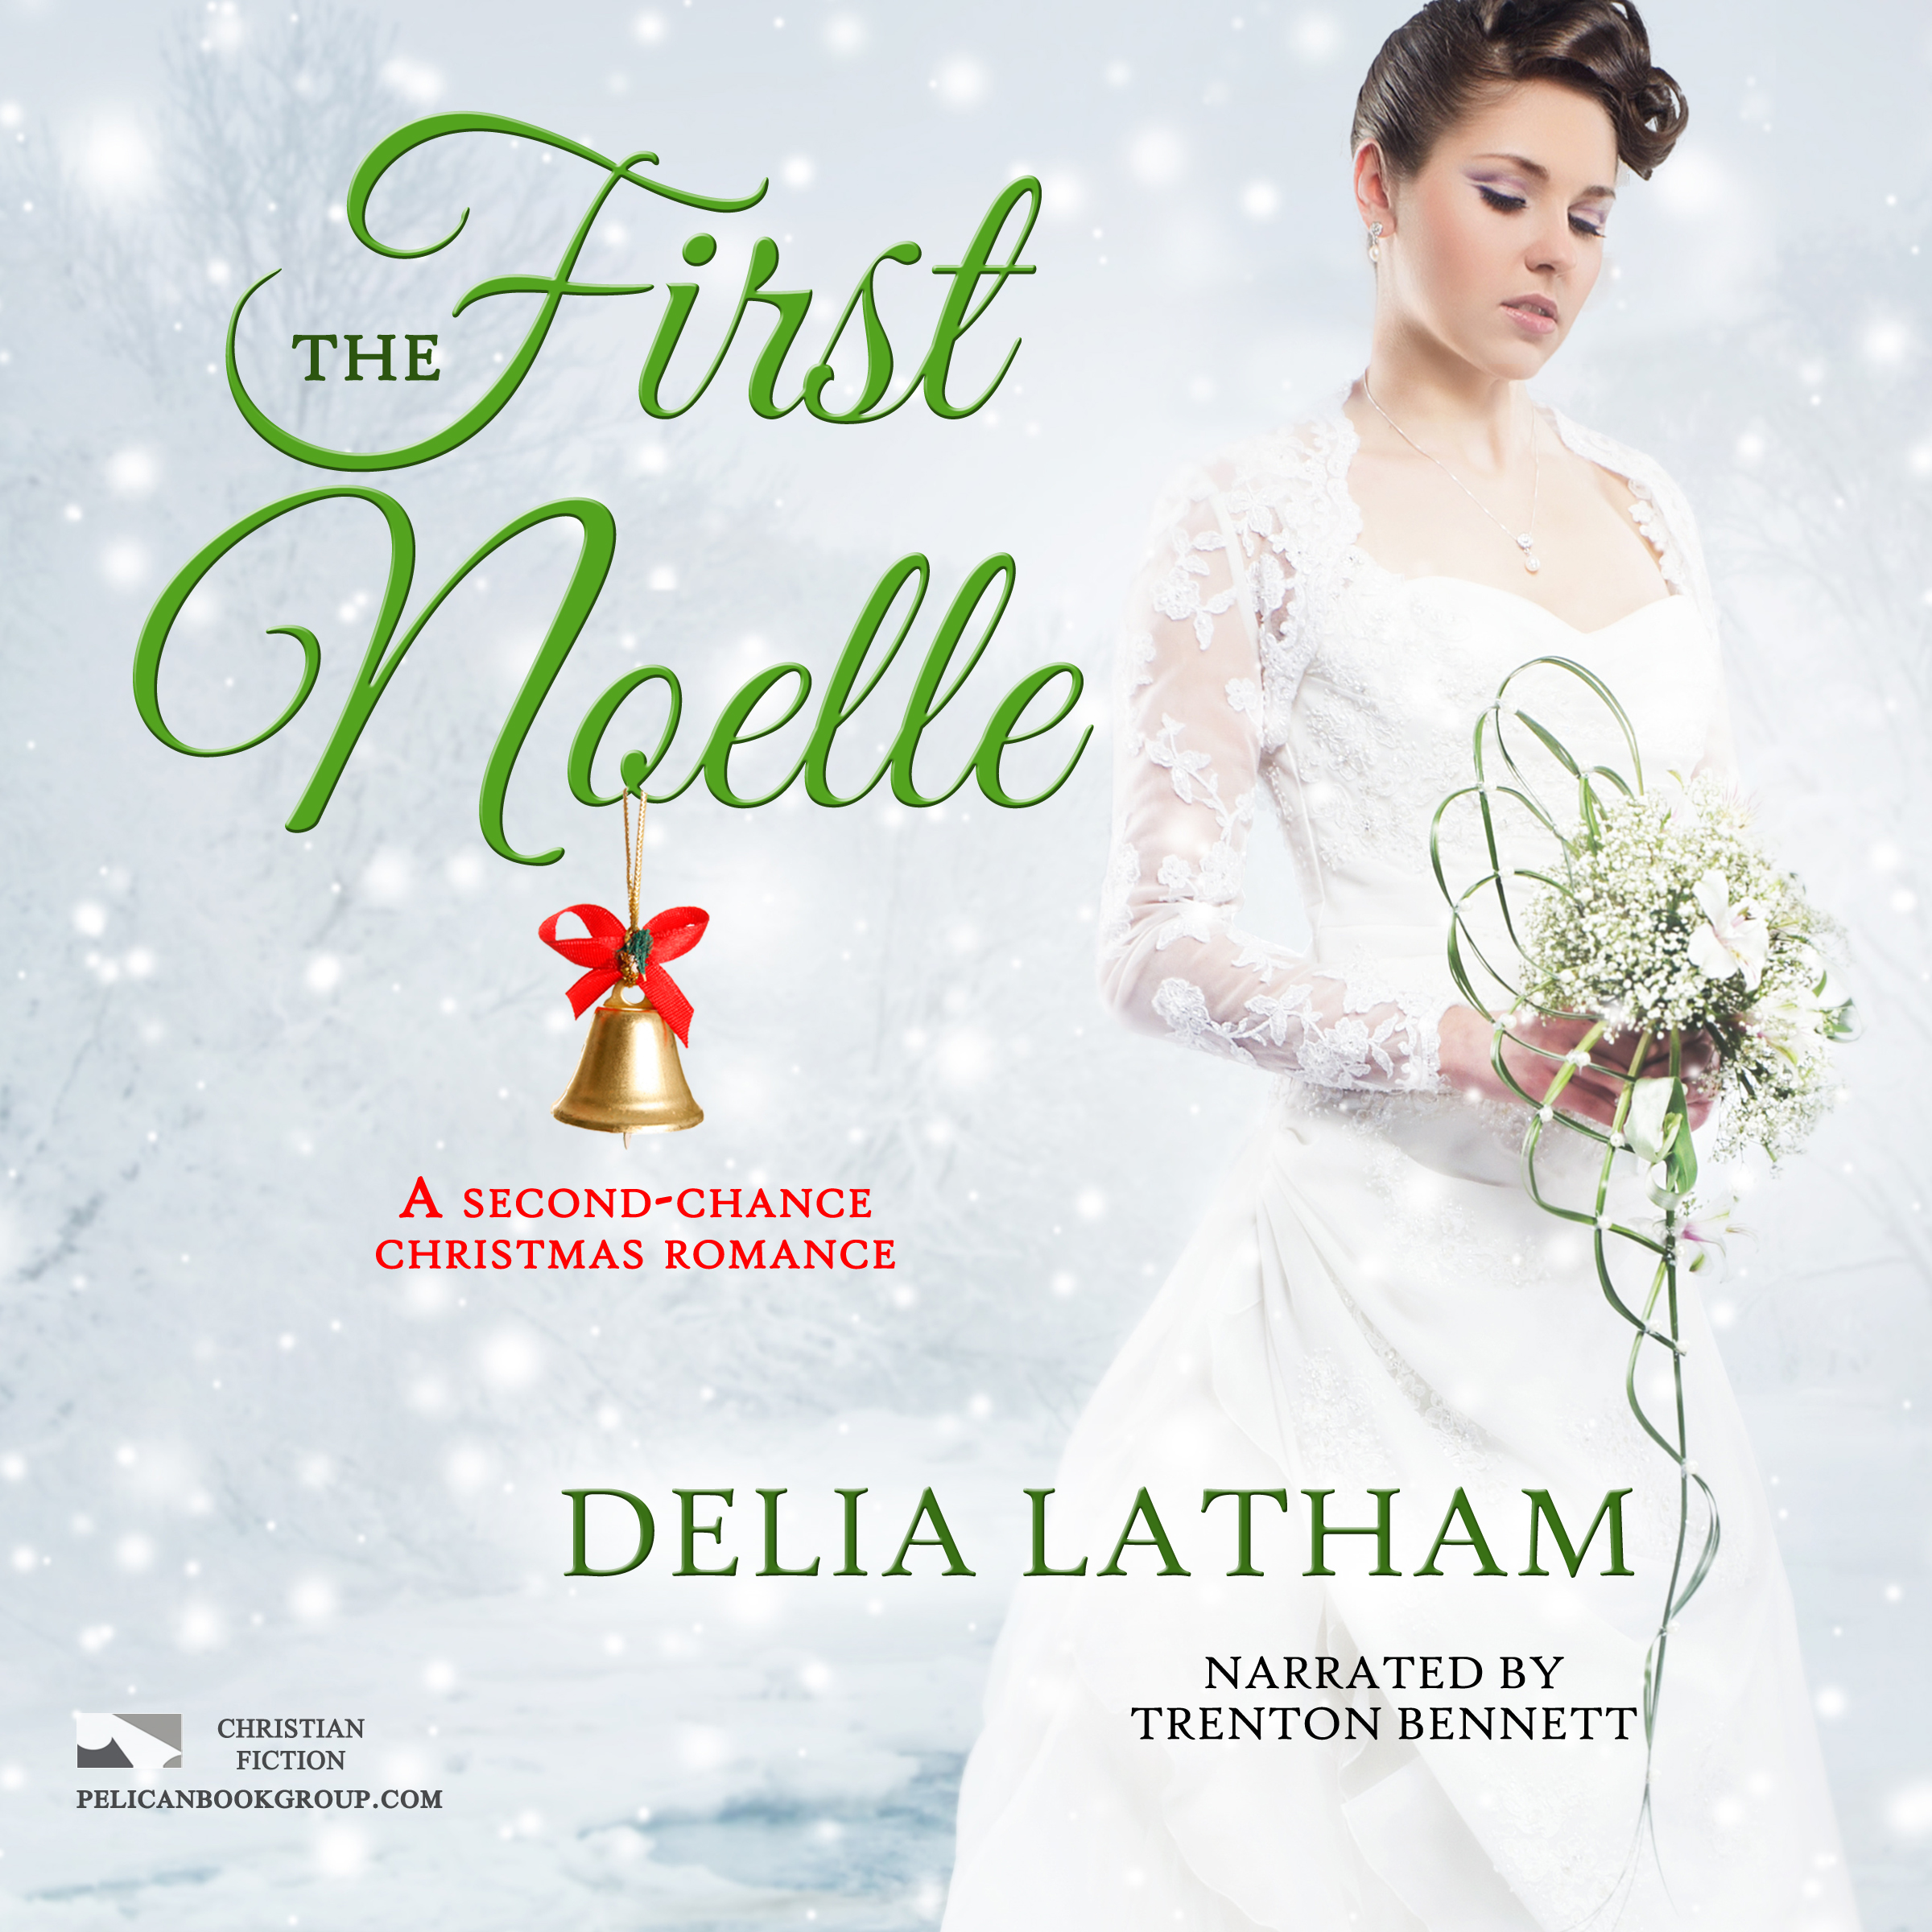 Trenton Bennett audiobook retail demo for First Noelle by Delia Latham on YouTube (video)